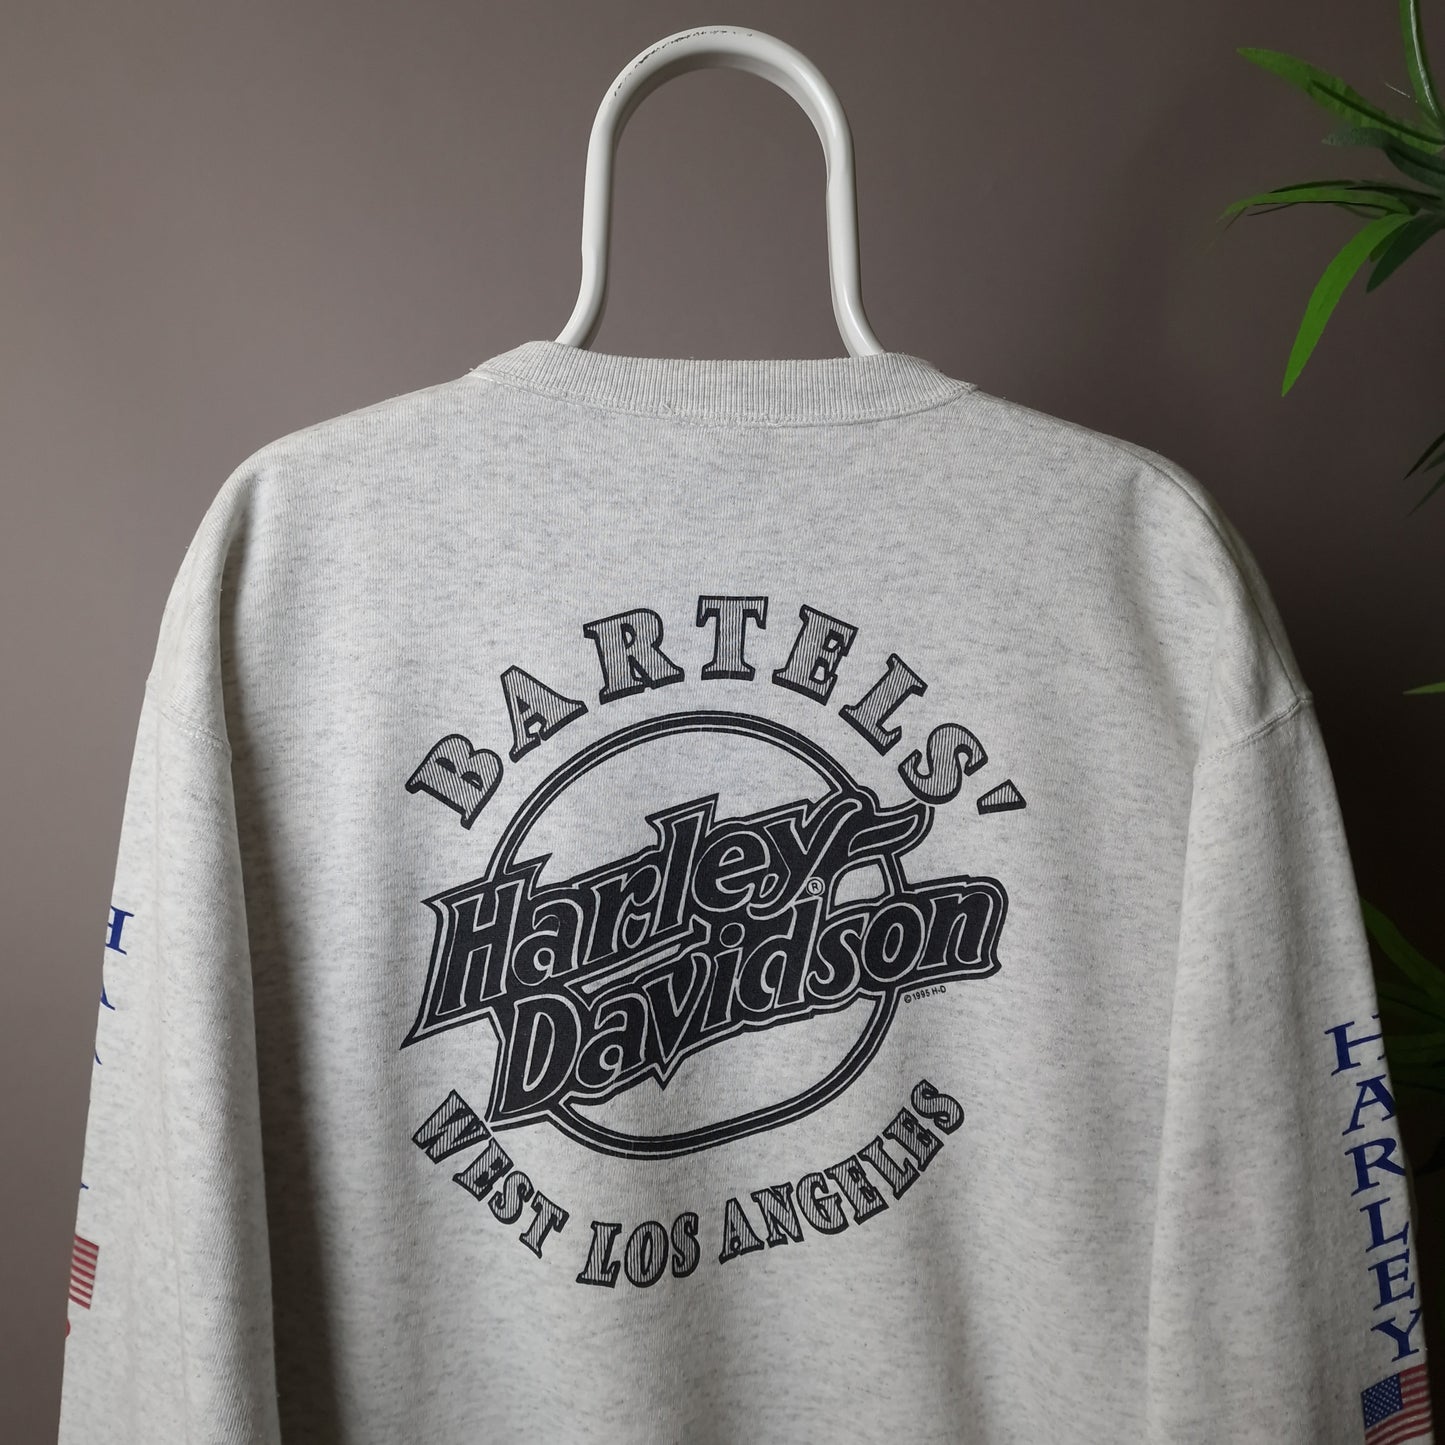 Vintage Harley Davidson sweatshirt in grey - medium